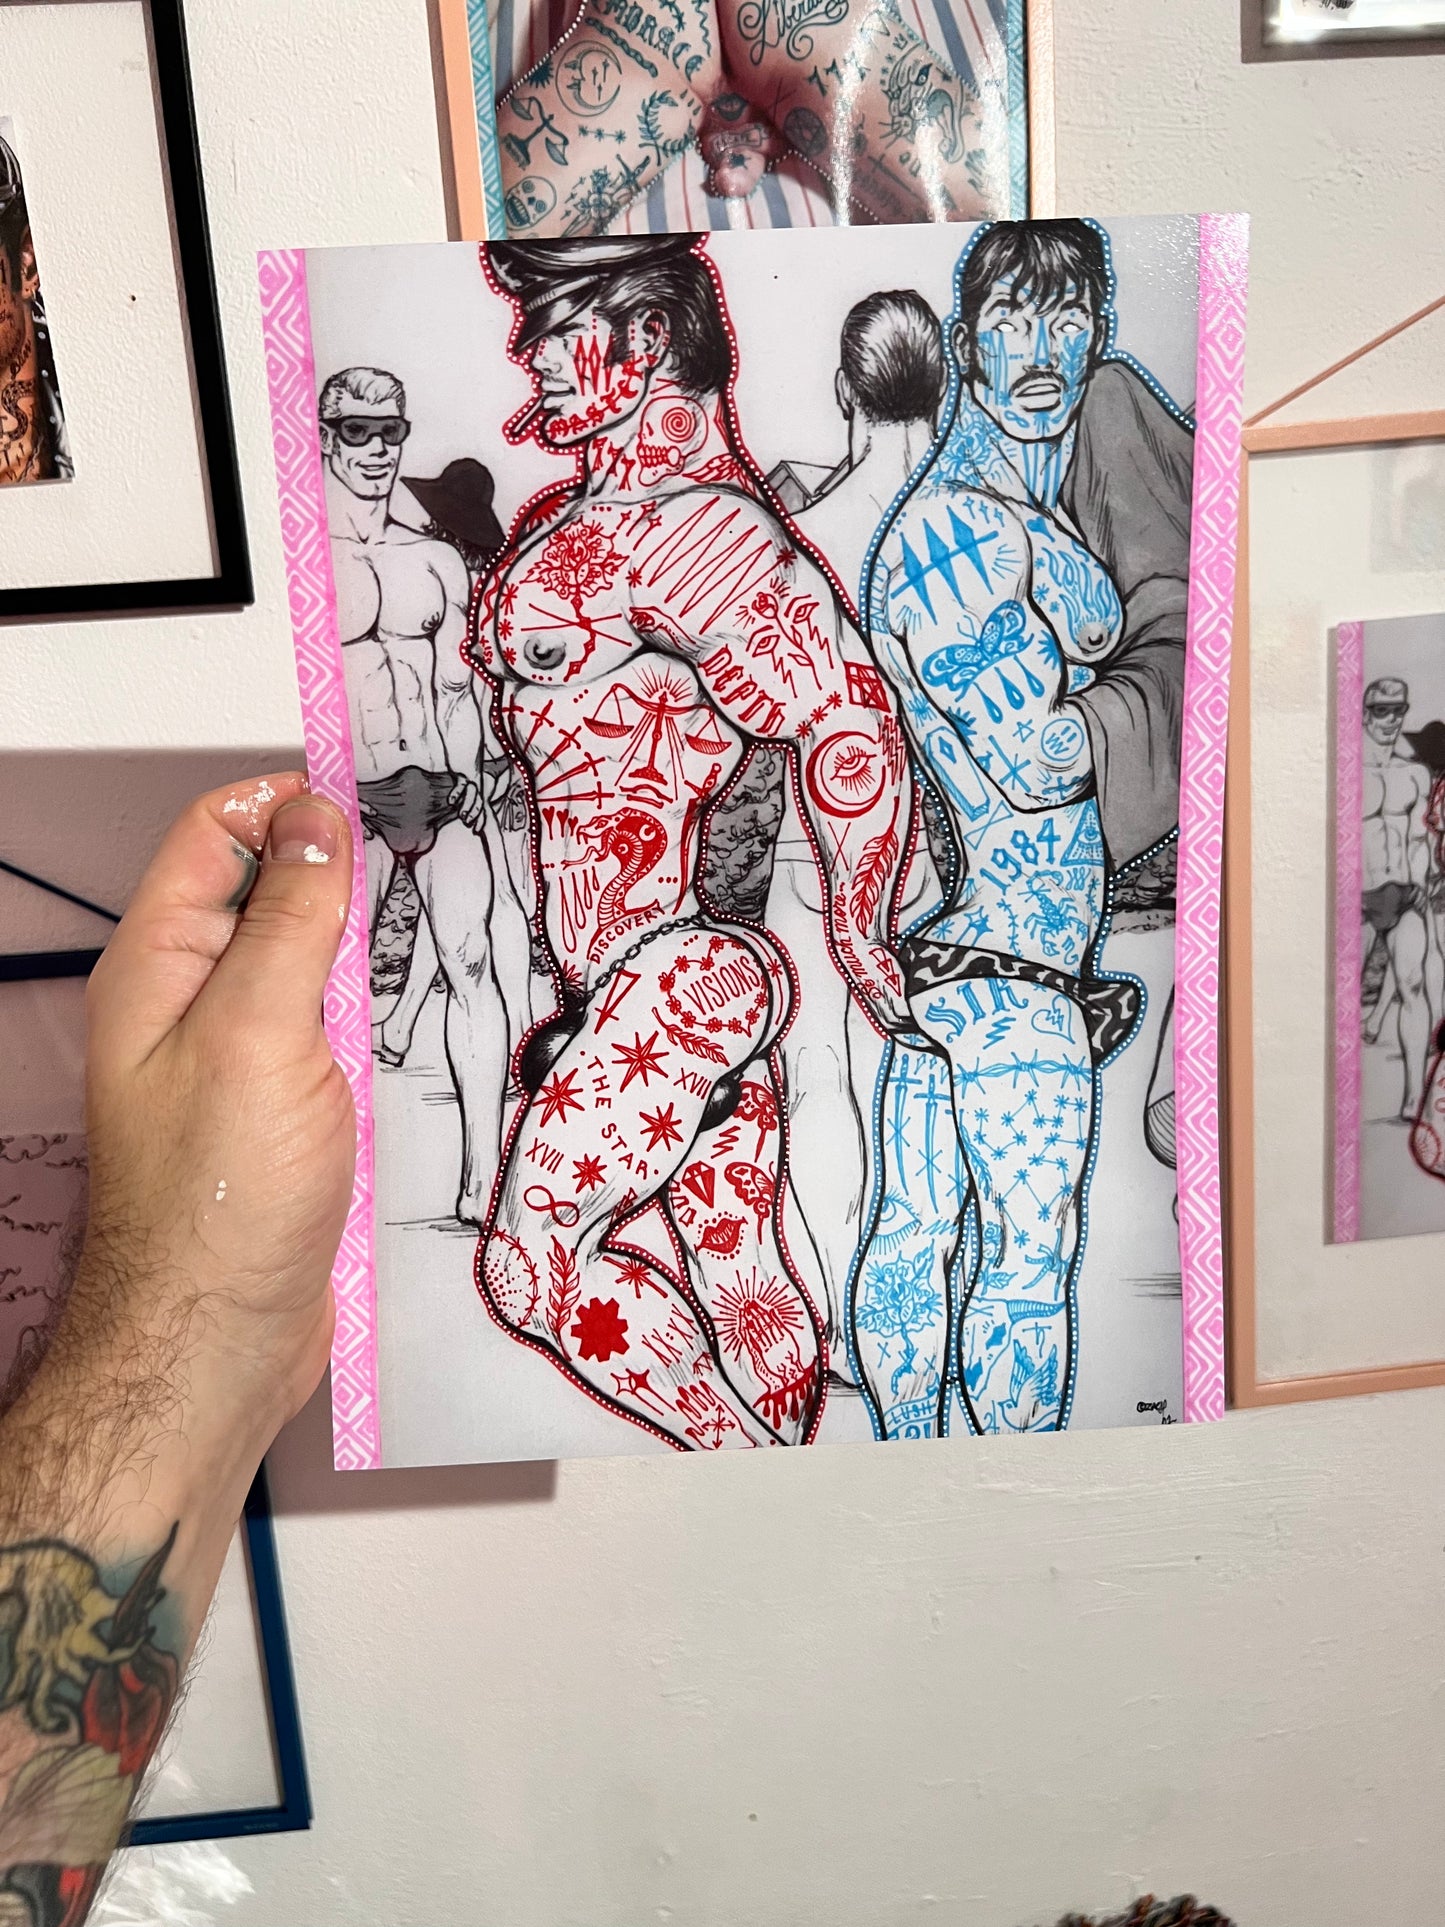 Zach Grear "Beach Boys" Print 21.6 x 28 cm